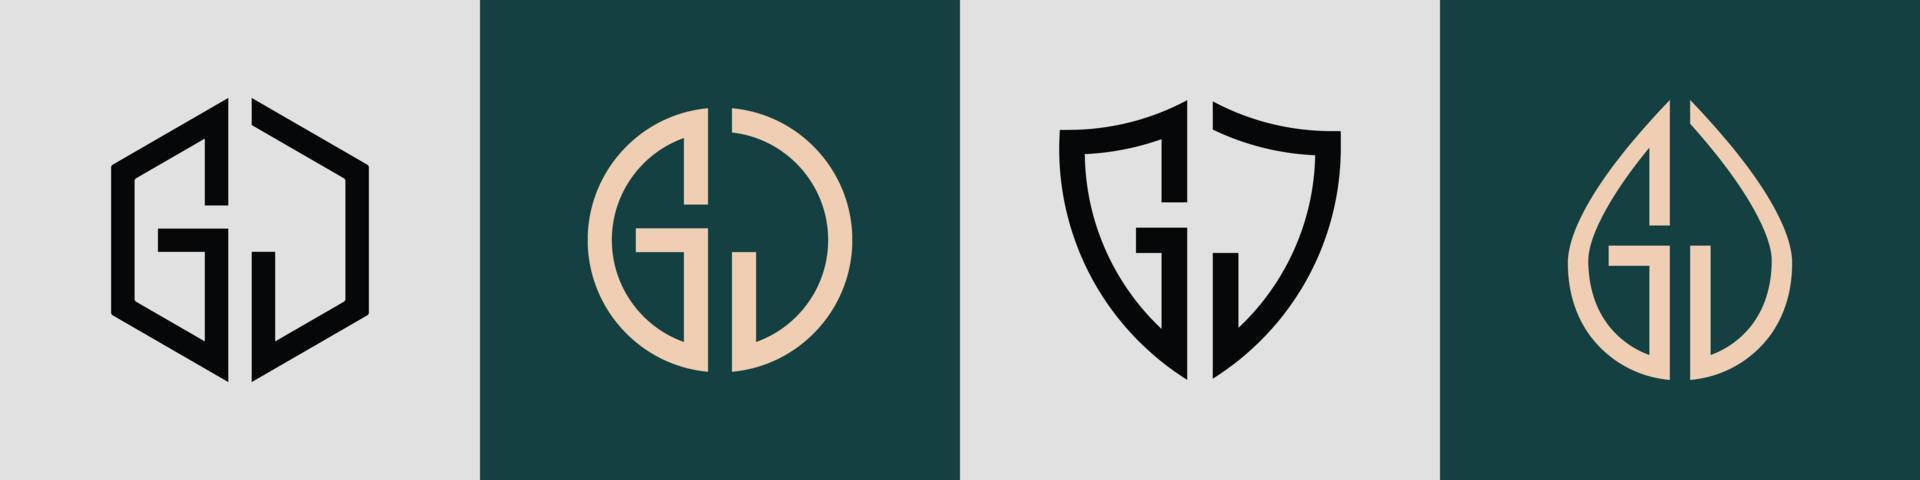 kreativ einfach Initiale Briefe gj Logo Designs bündeln. vektor